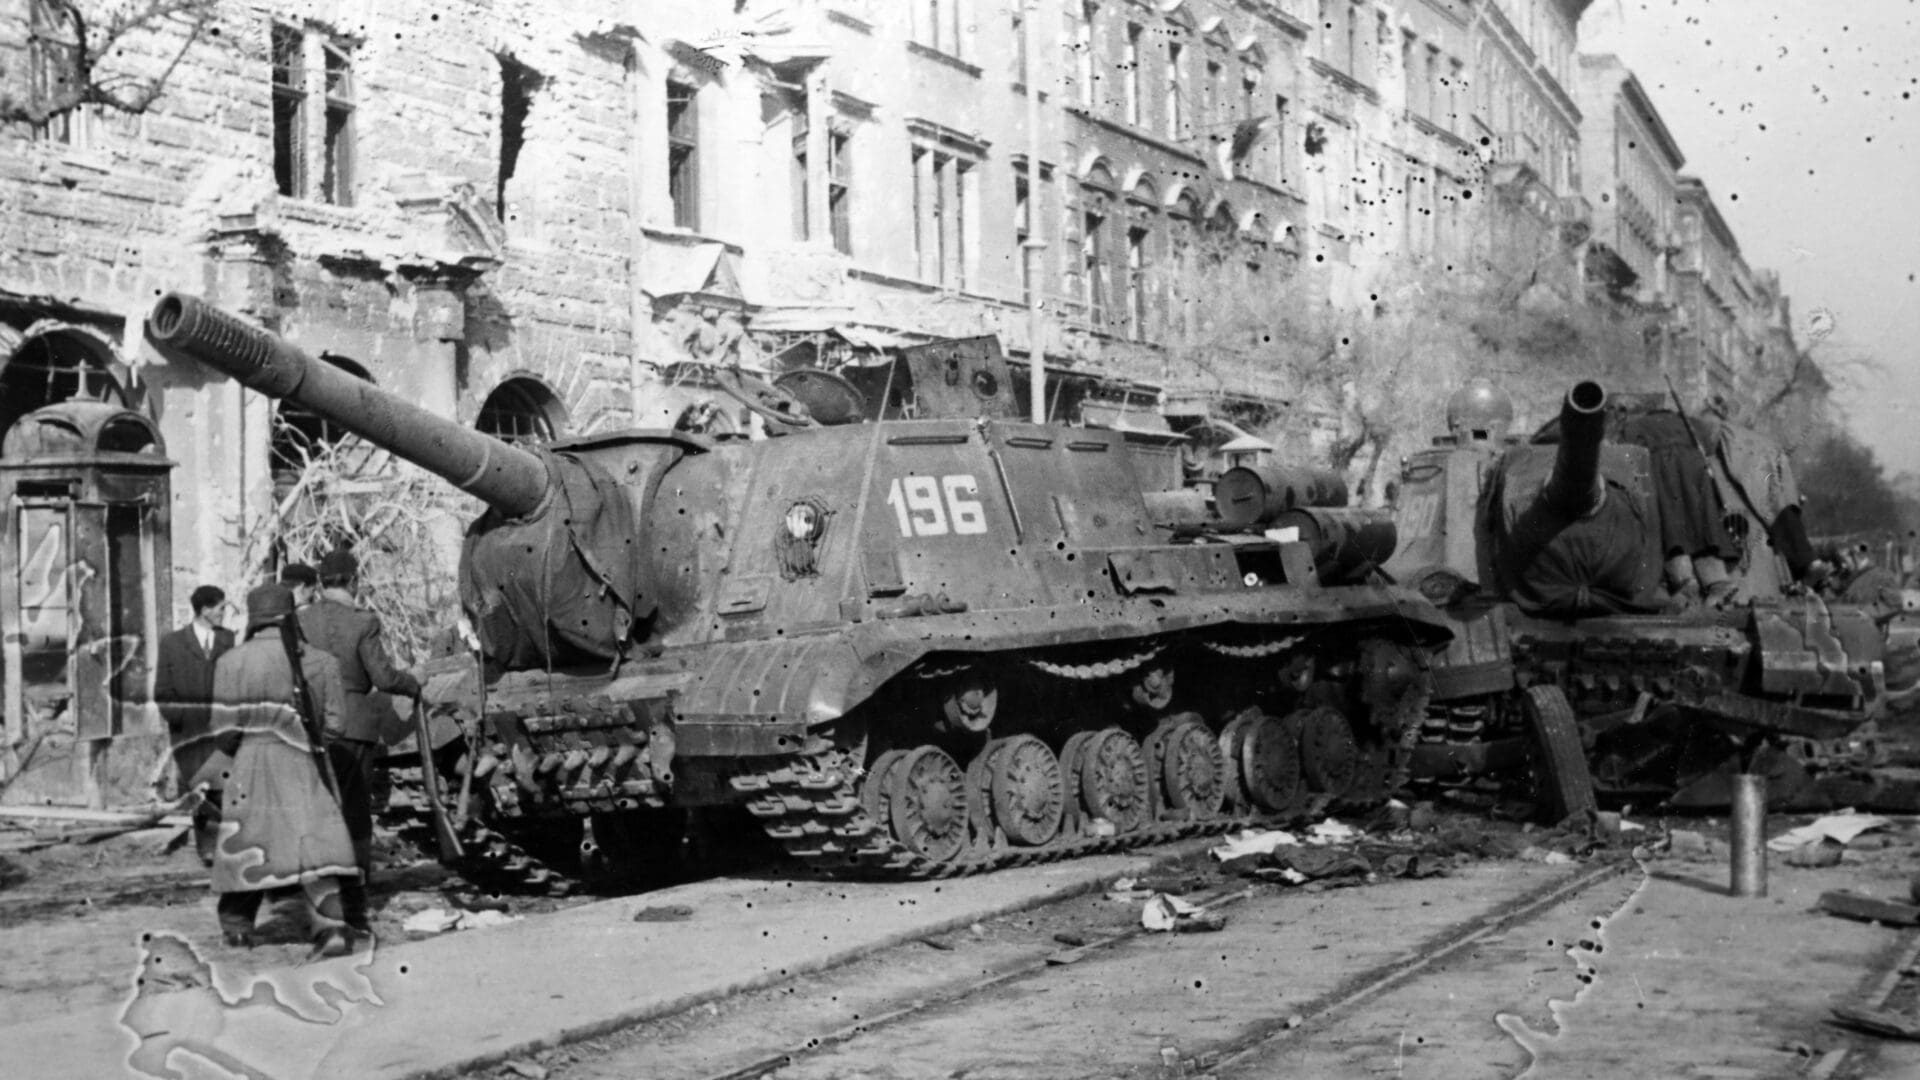 Revolutionaries near two destroyed tanks in Budapest in November 1956.